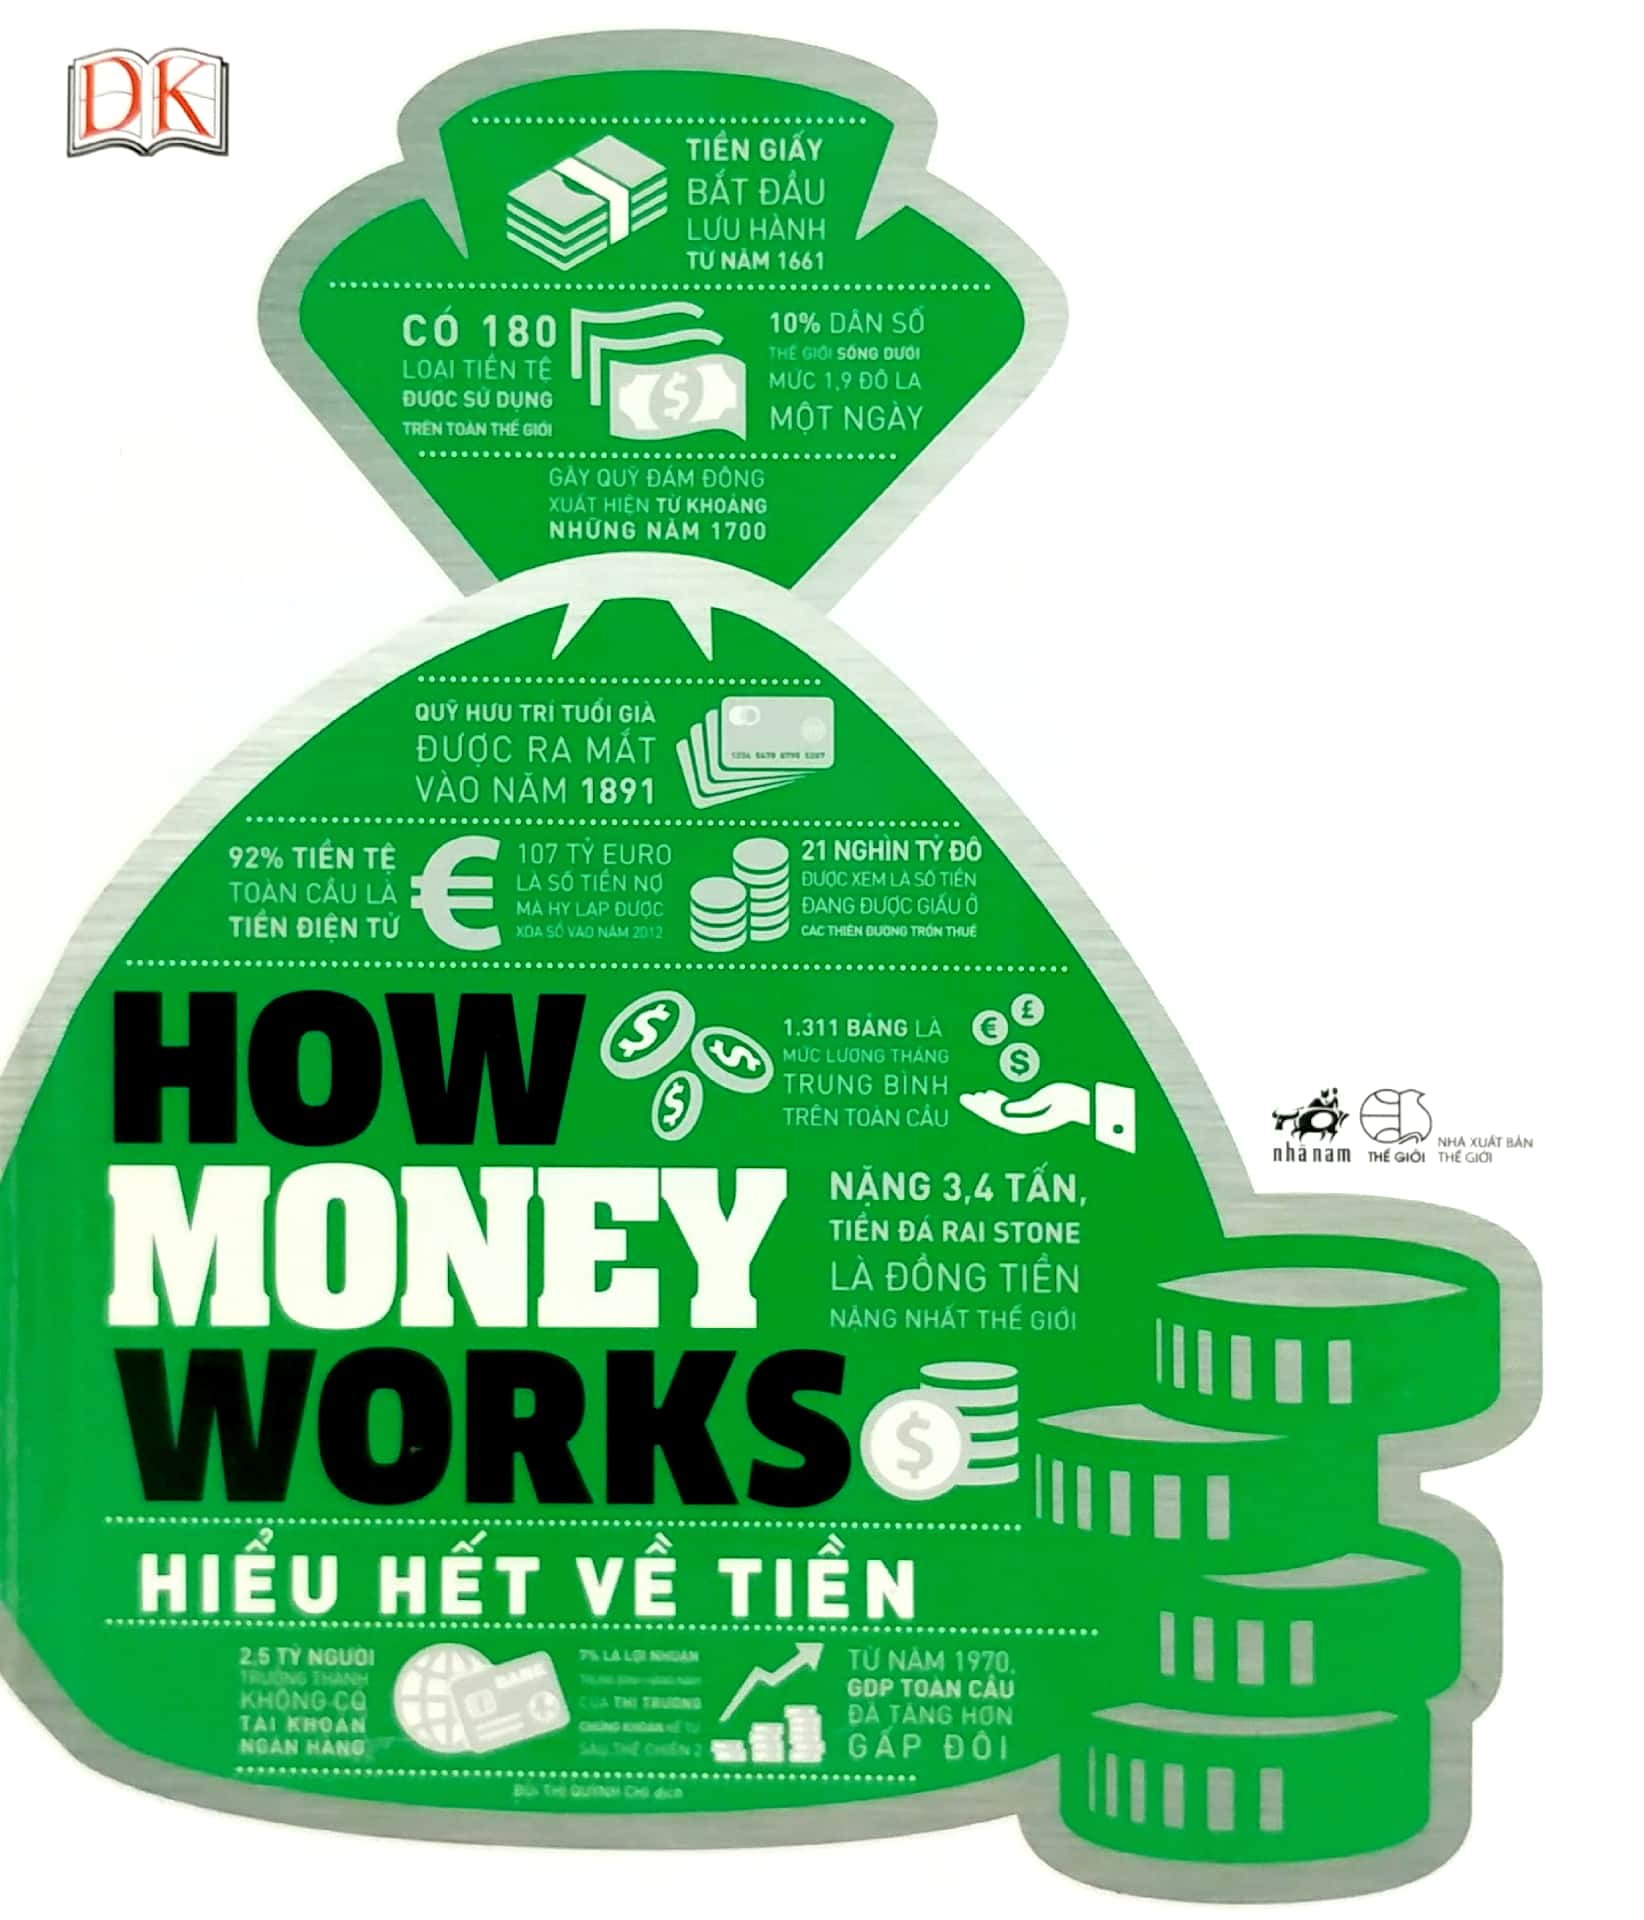 How Money Works - Hiểu Hết Về Tiền PDF